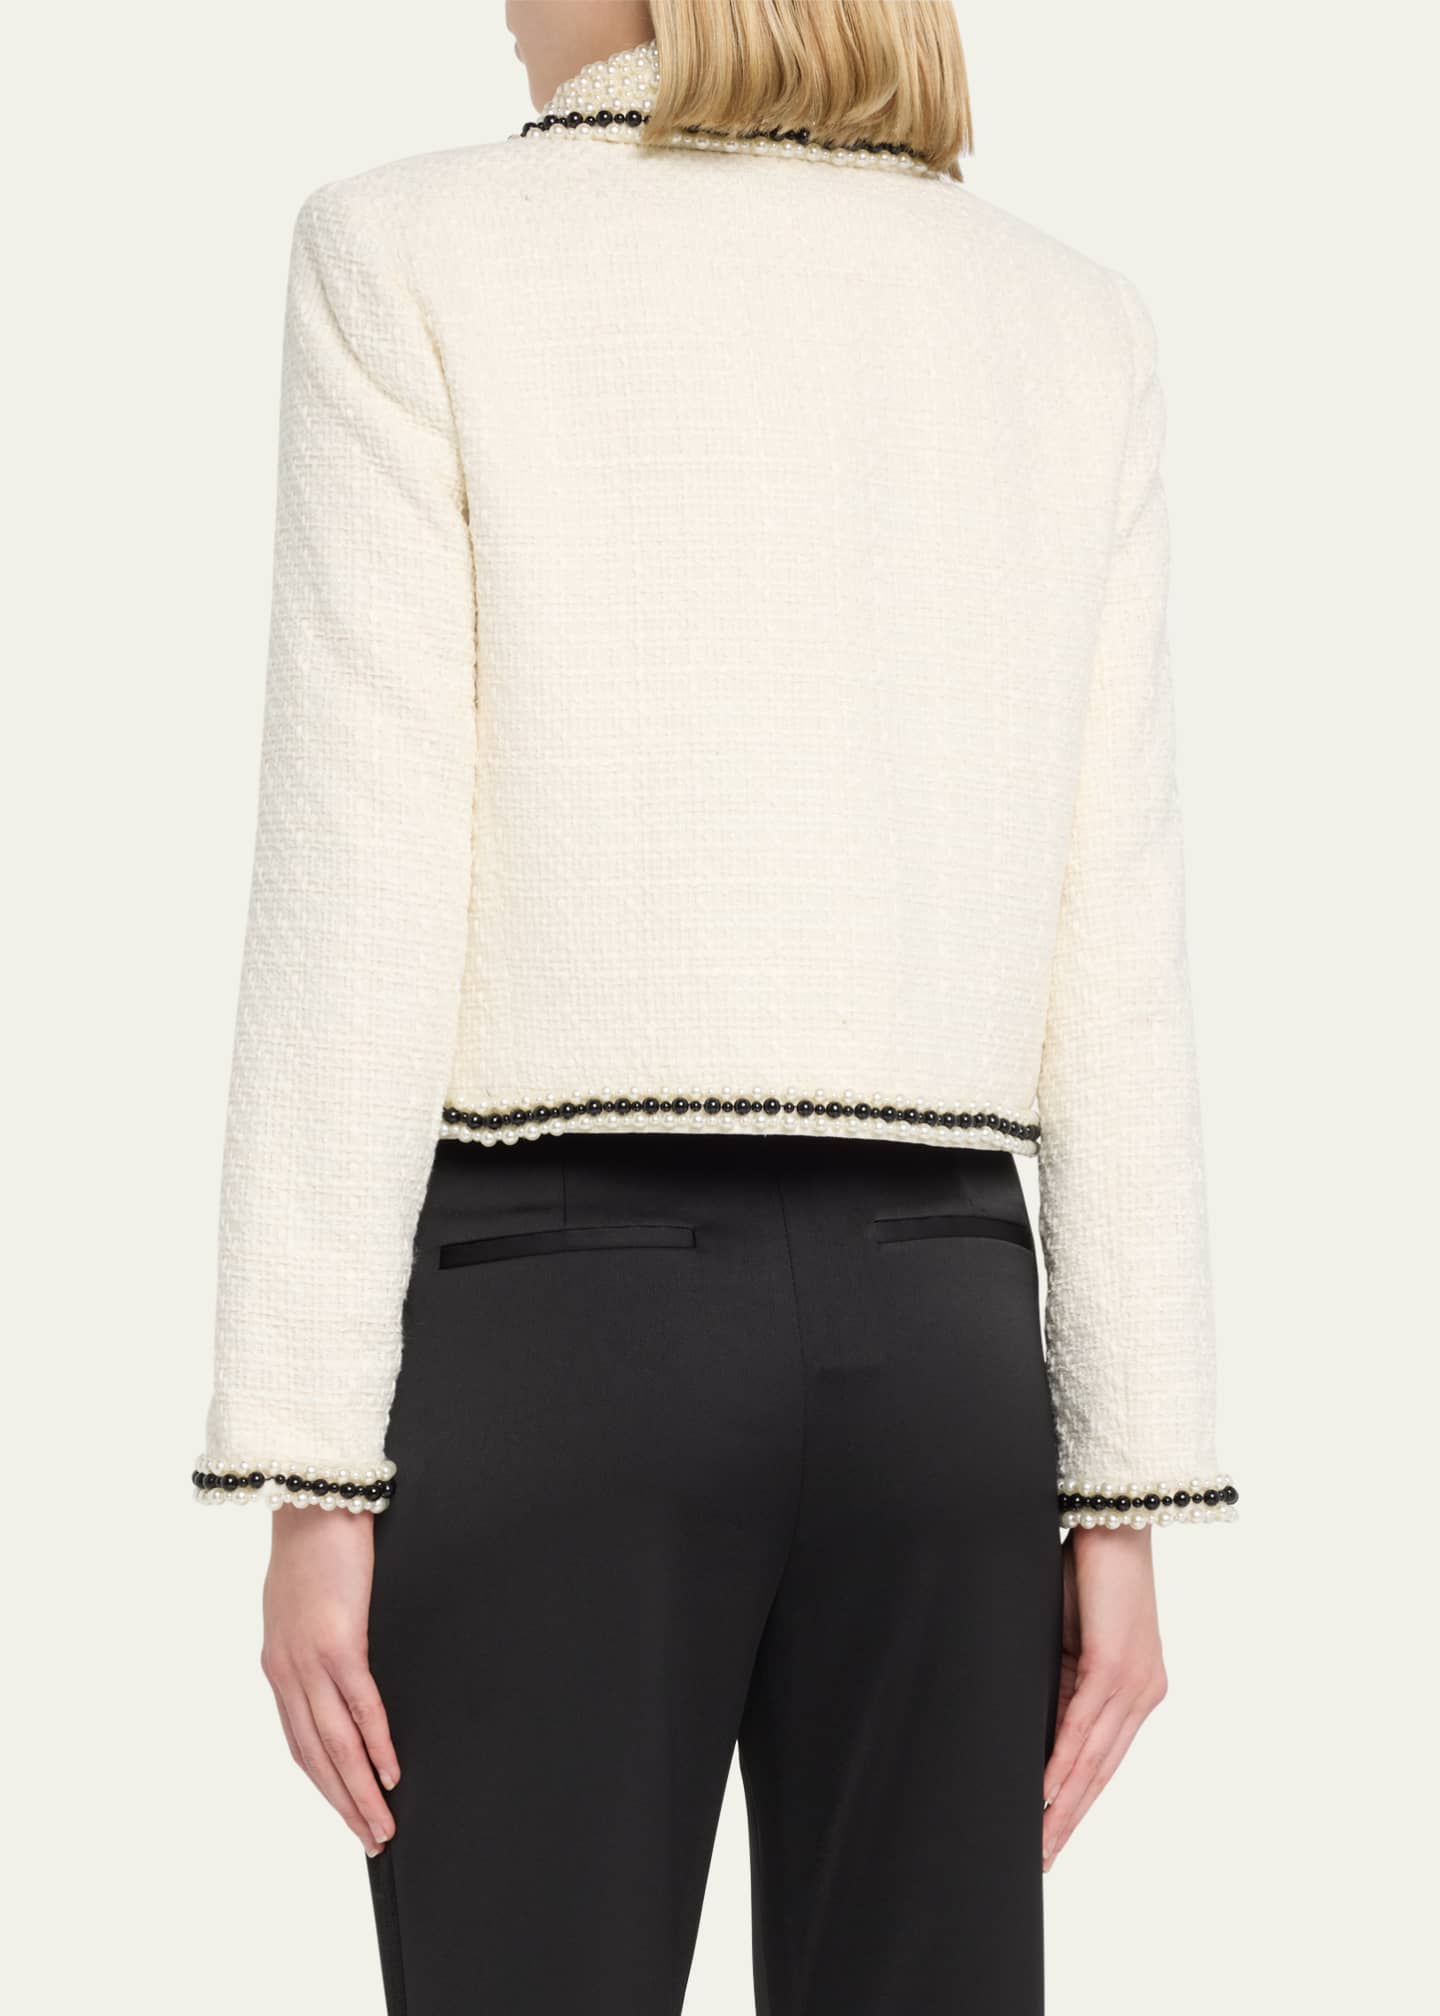 Alice + Olivia Kidman Embellished Tweed Jacket - Bergdorf Goodman